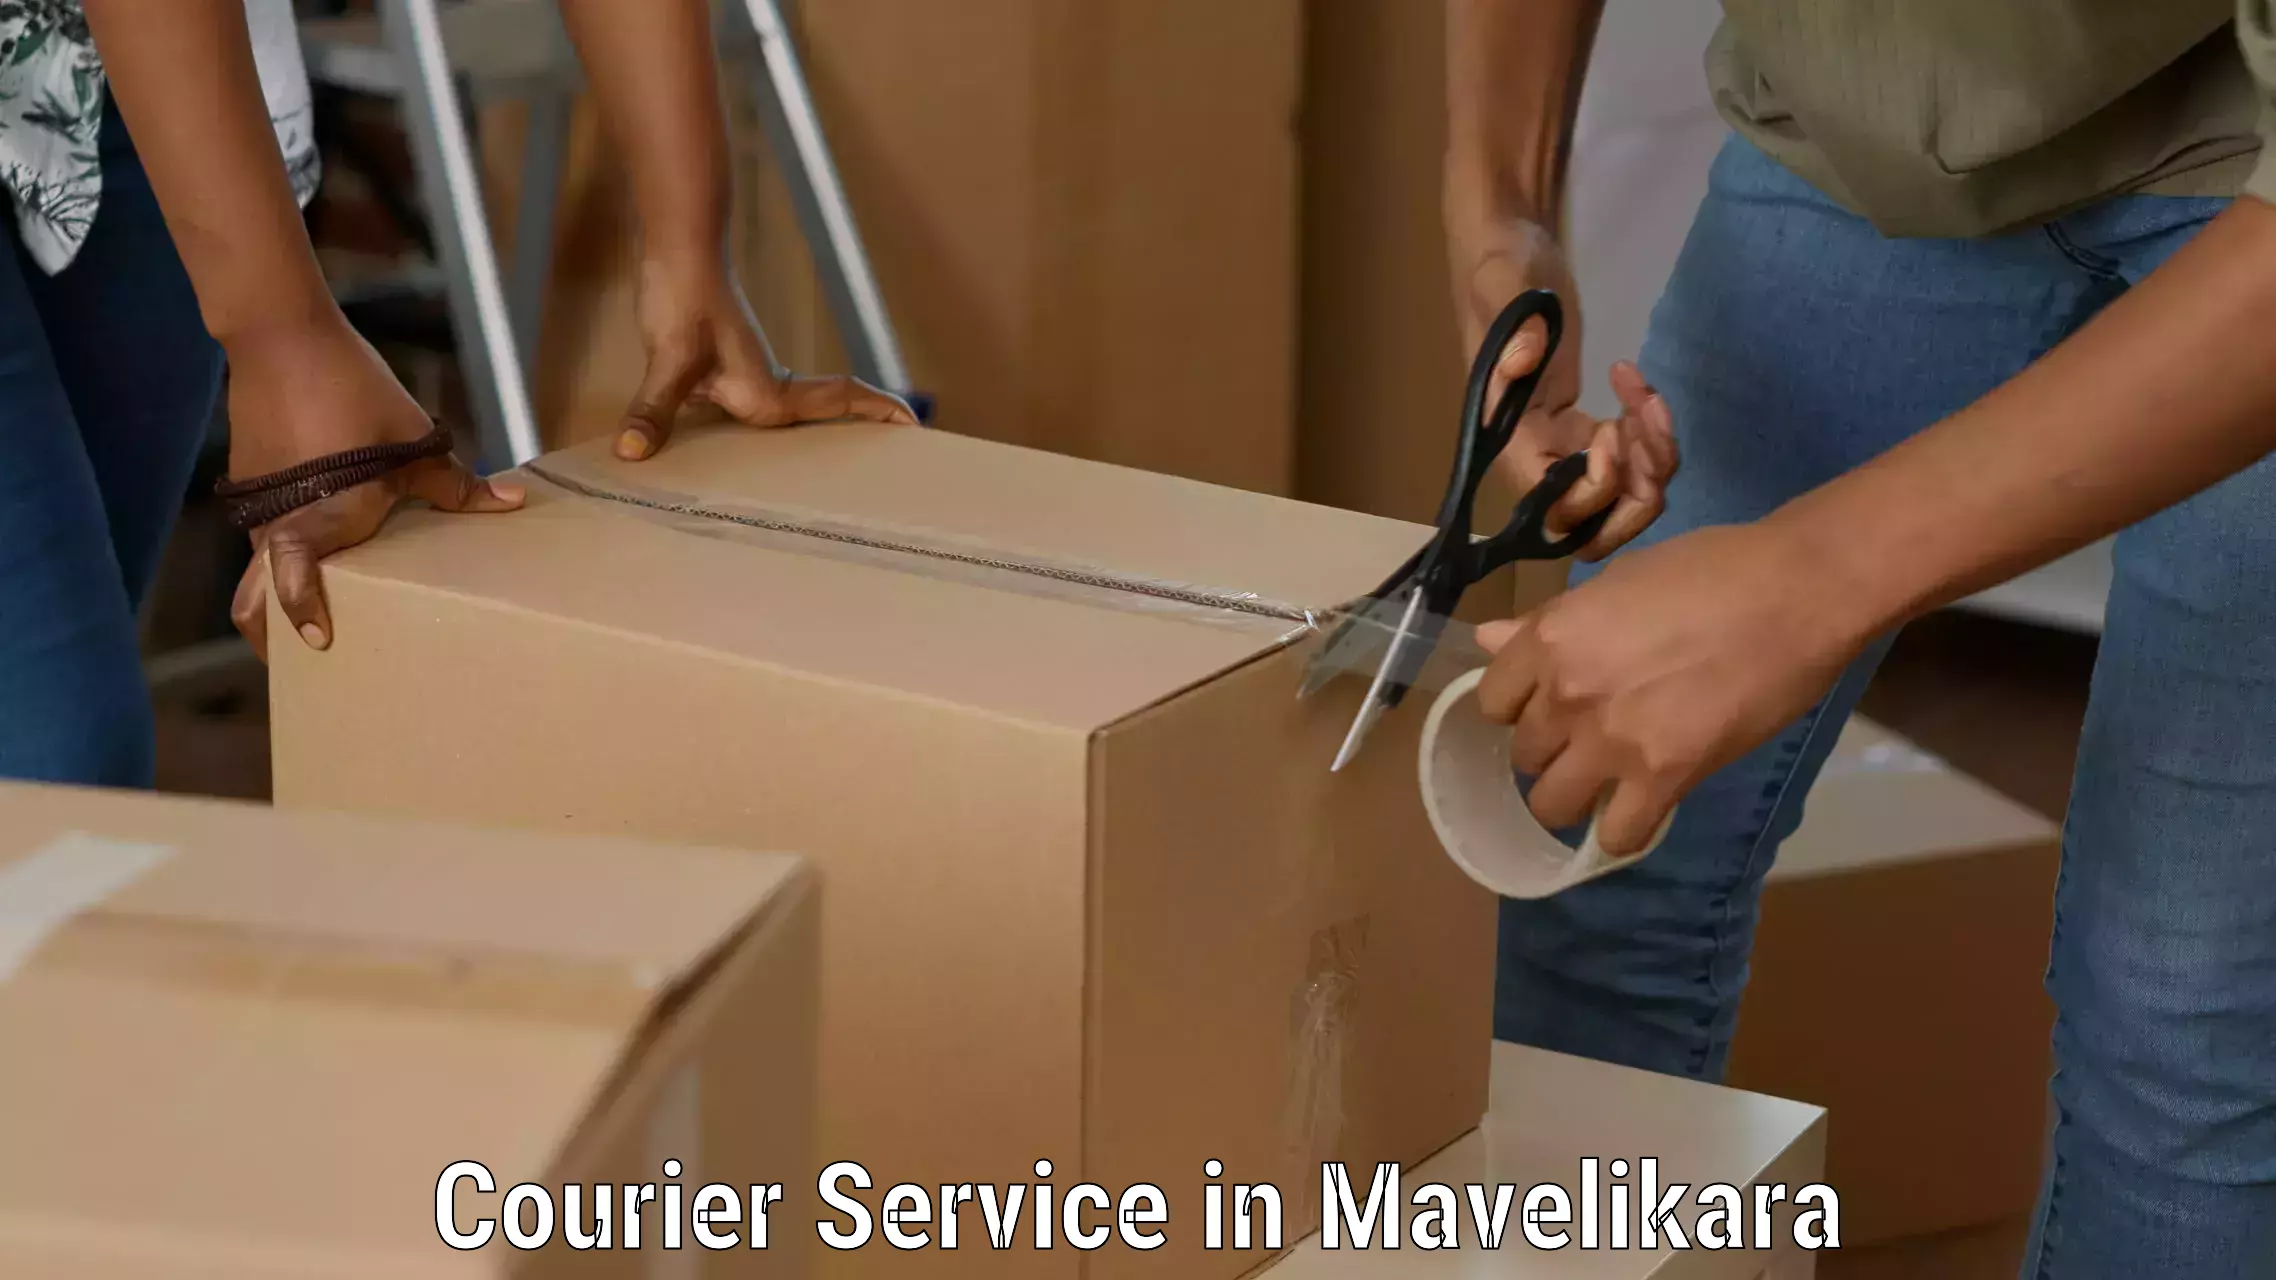 Advanced shipping network in Mavelikara